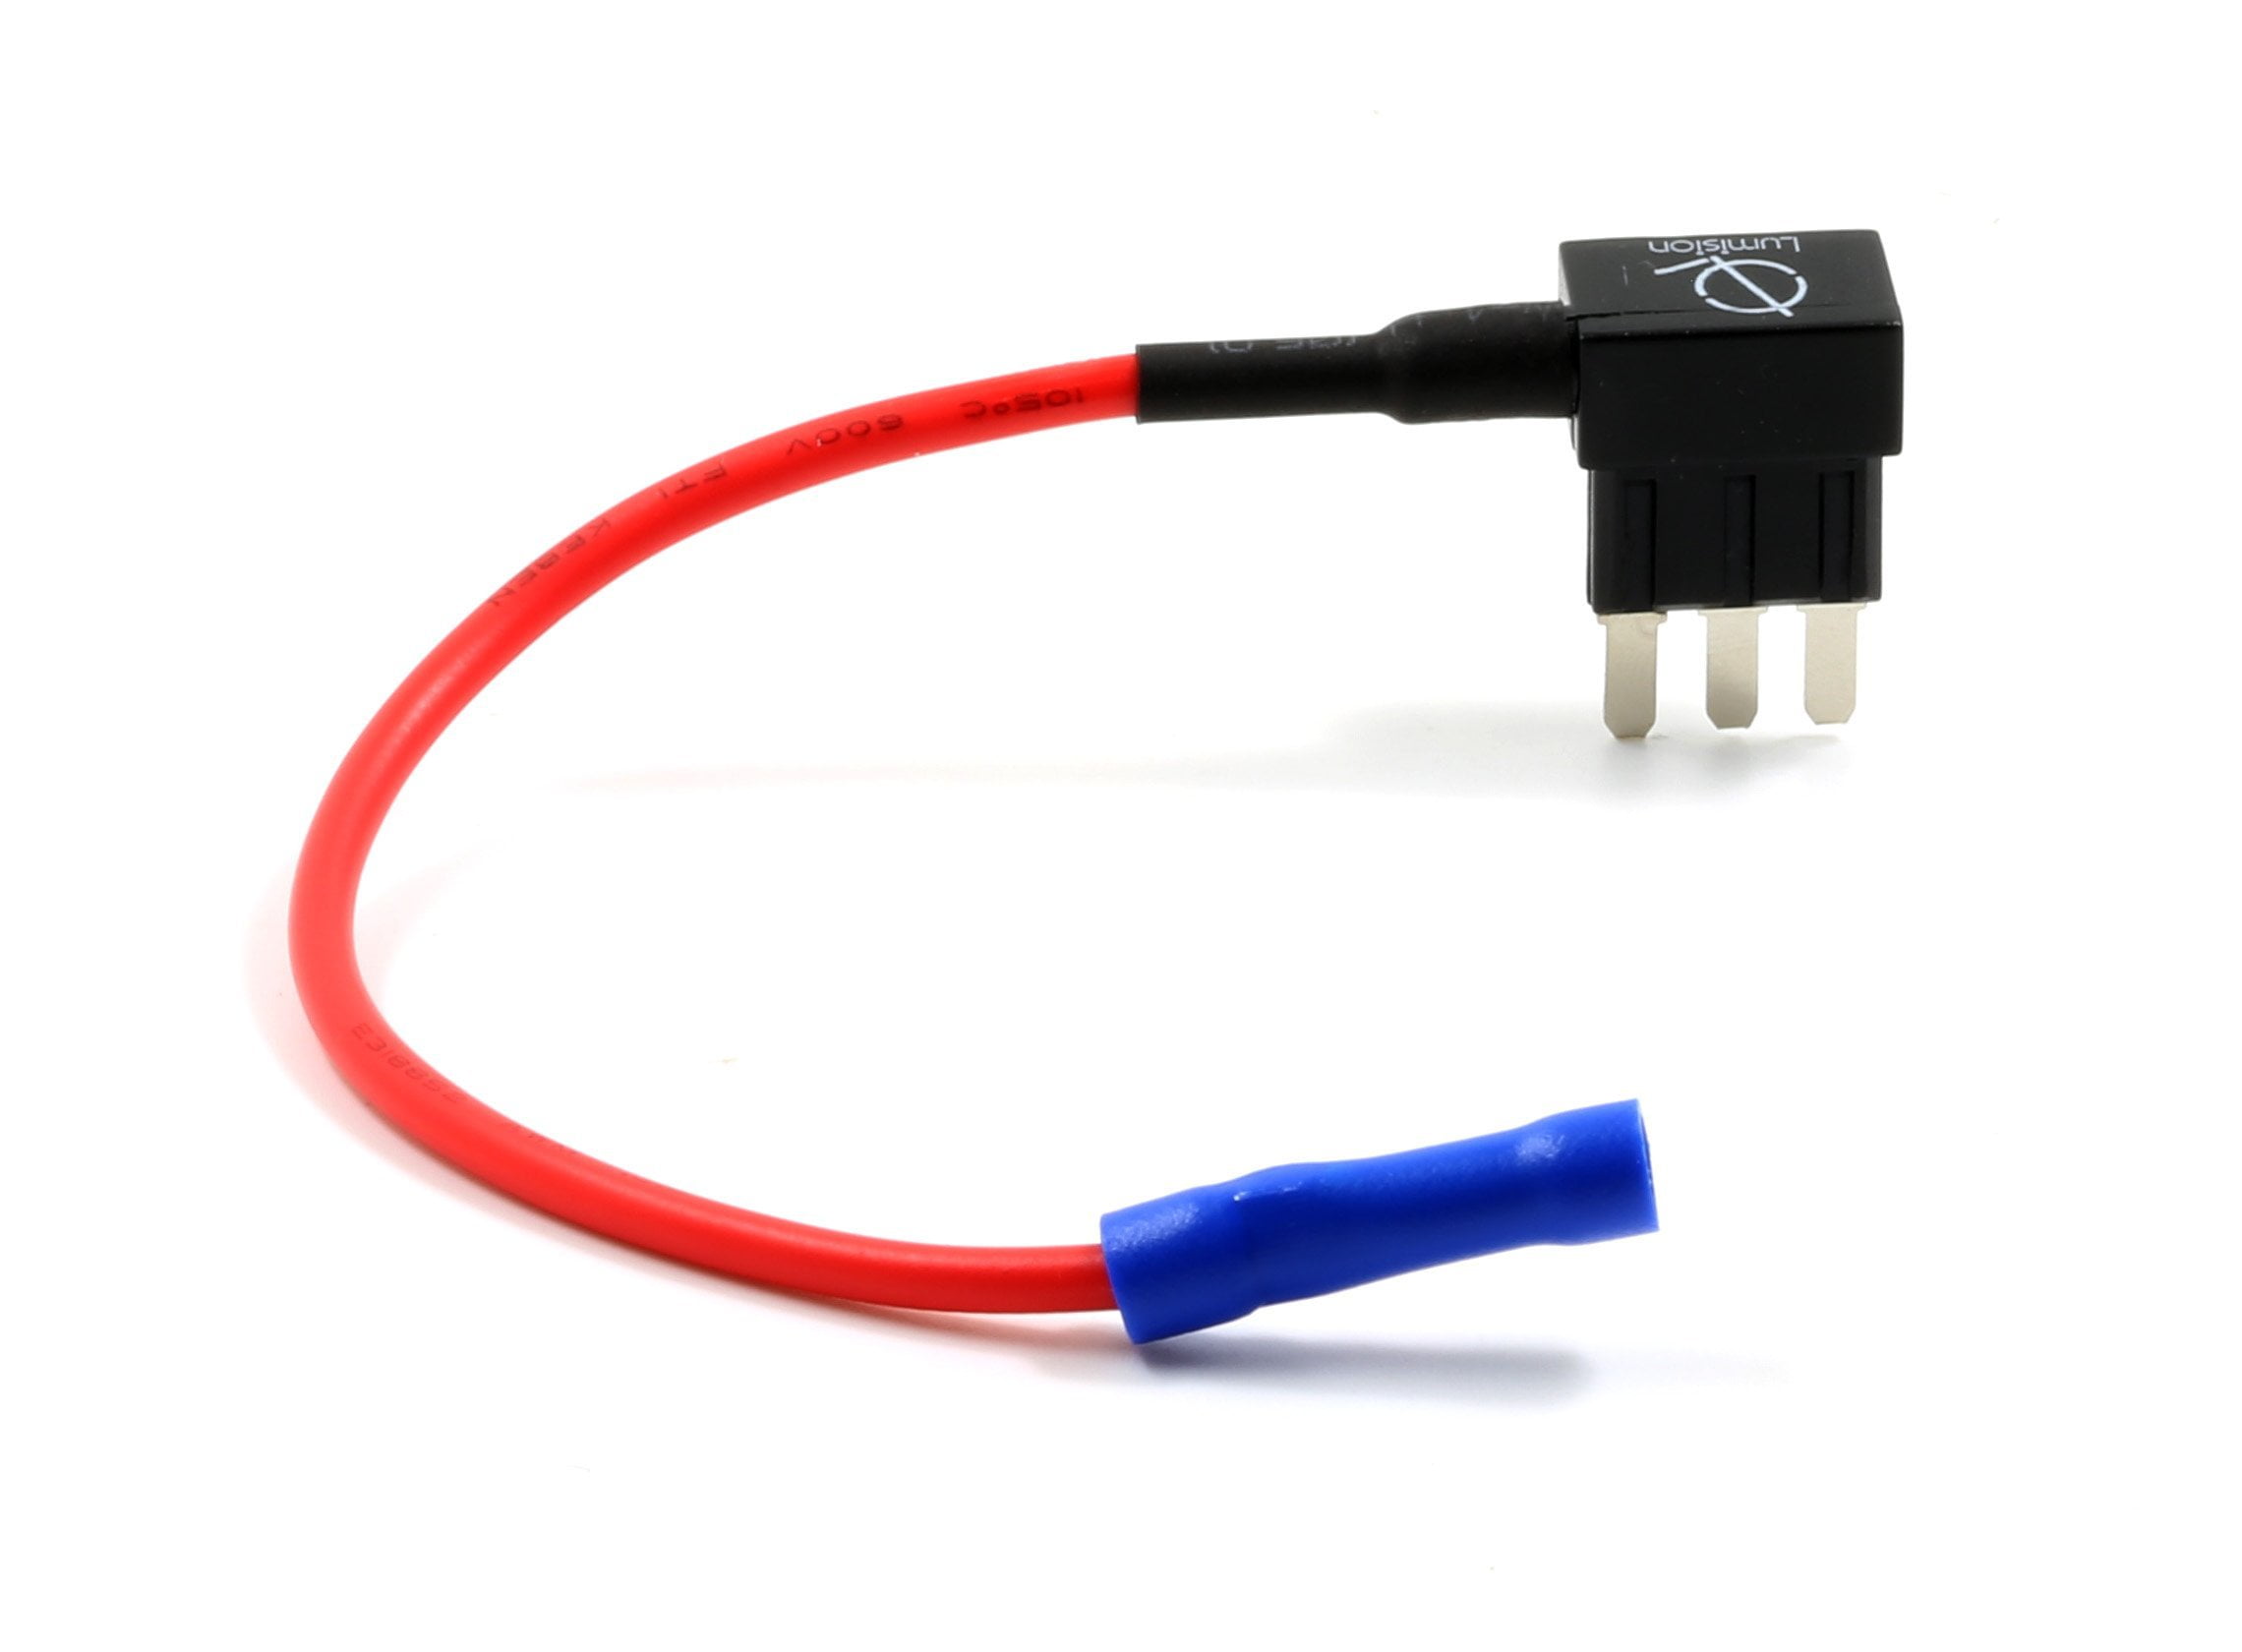 6pcs Circuit Fusible Robinet Atl Micro 3 Mini Adaptateur Support